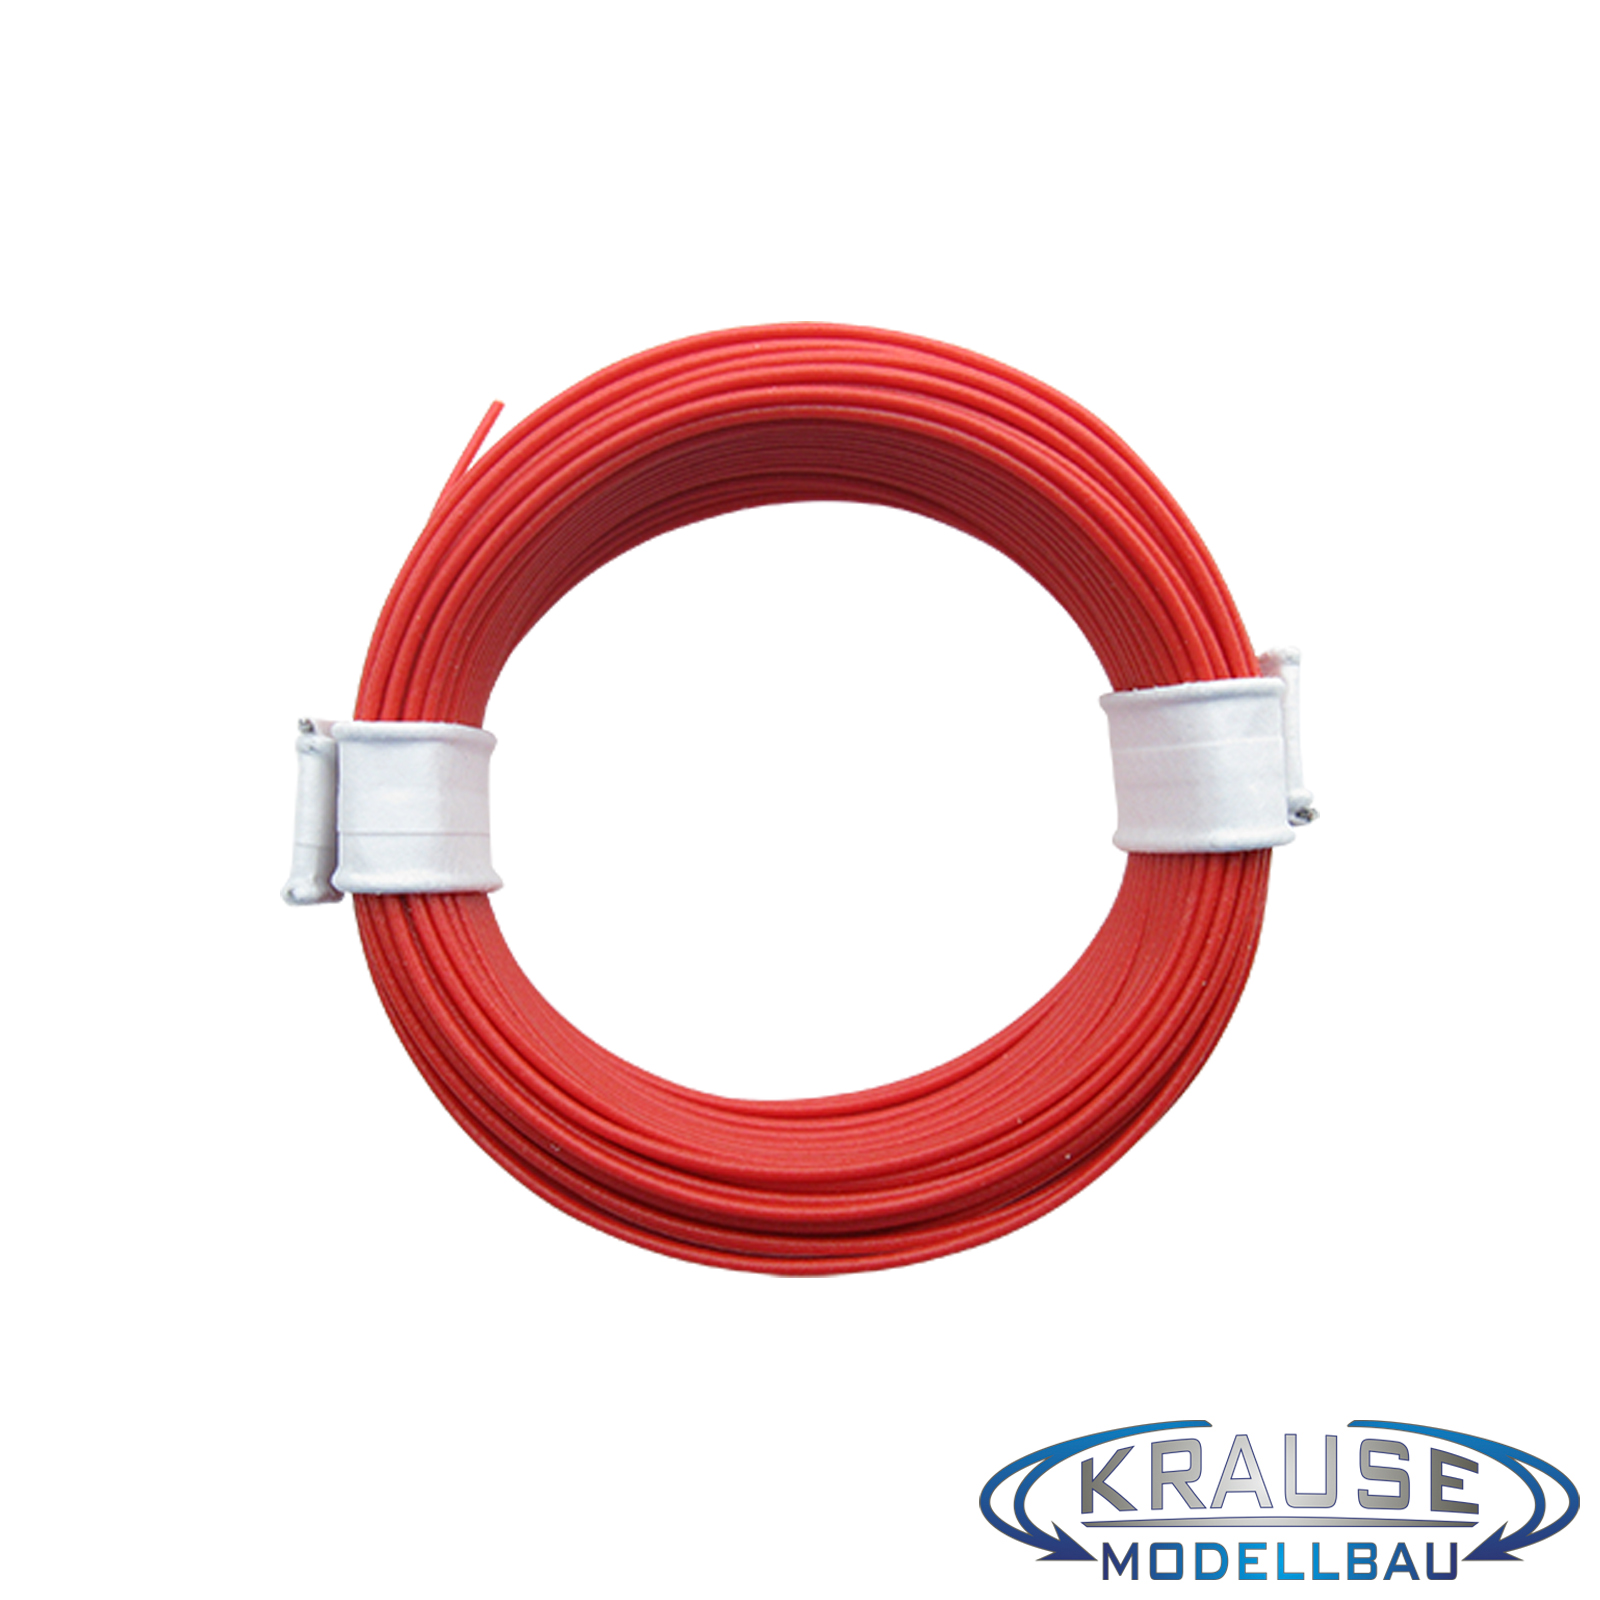 Schaltlitze Miniaturkabel LIY 0,14 mm² flexibel rot 10 Meter Modellbahn 